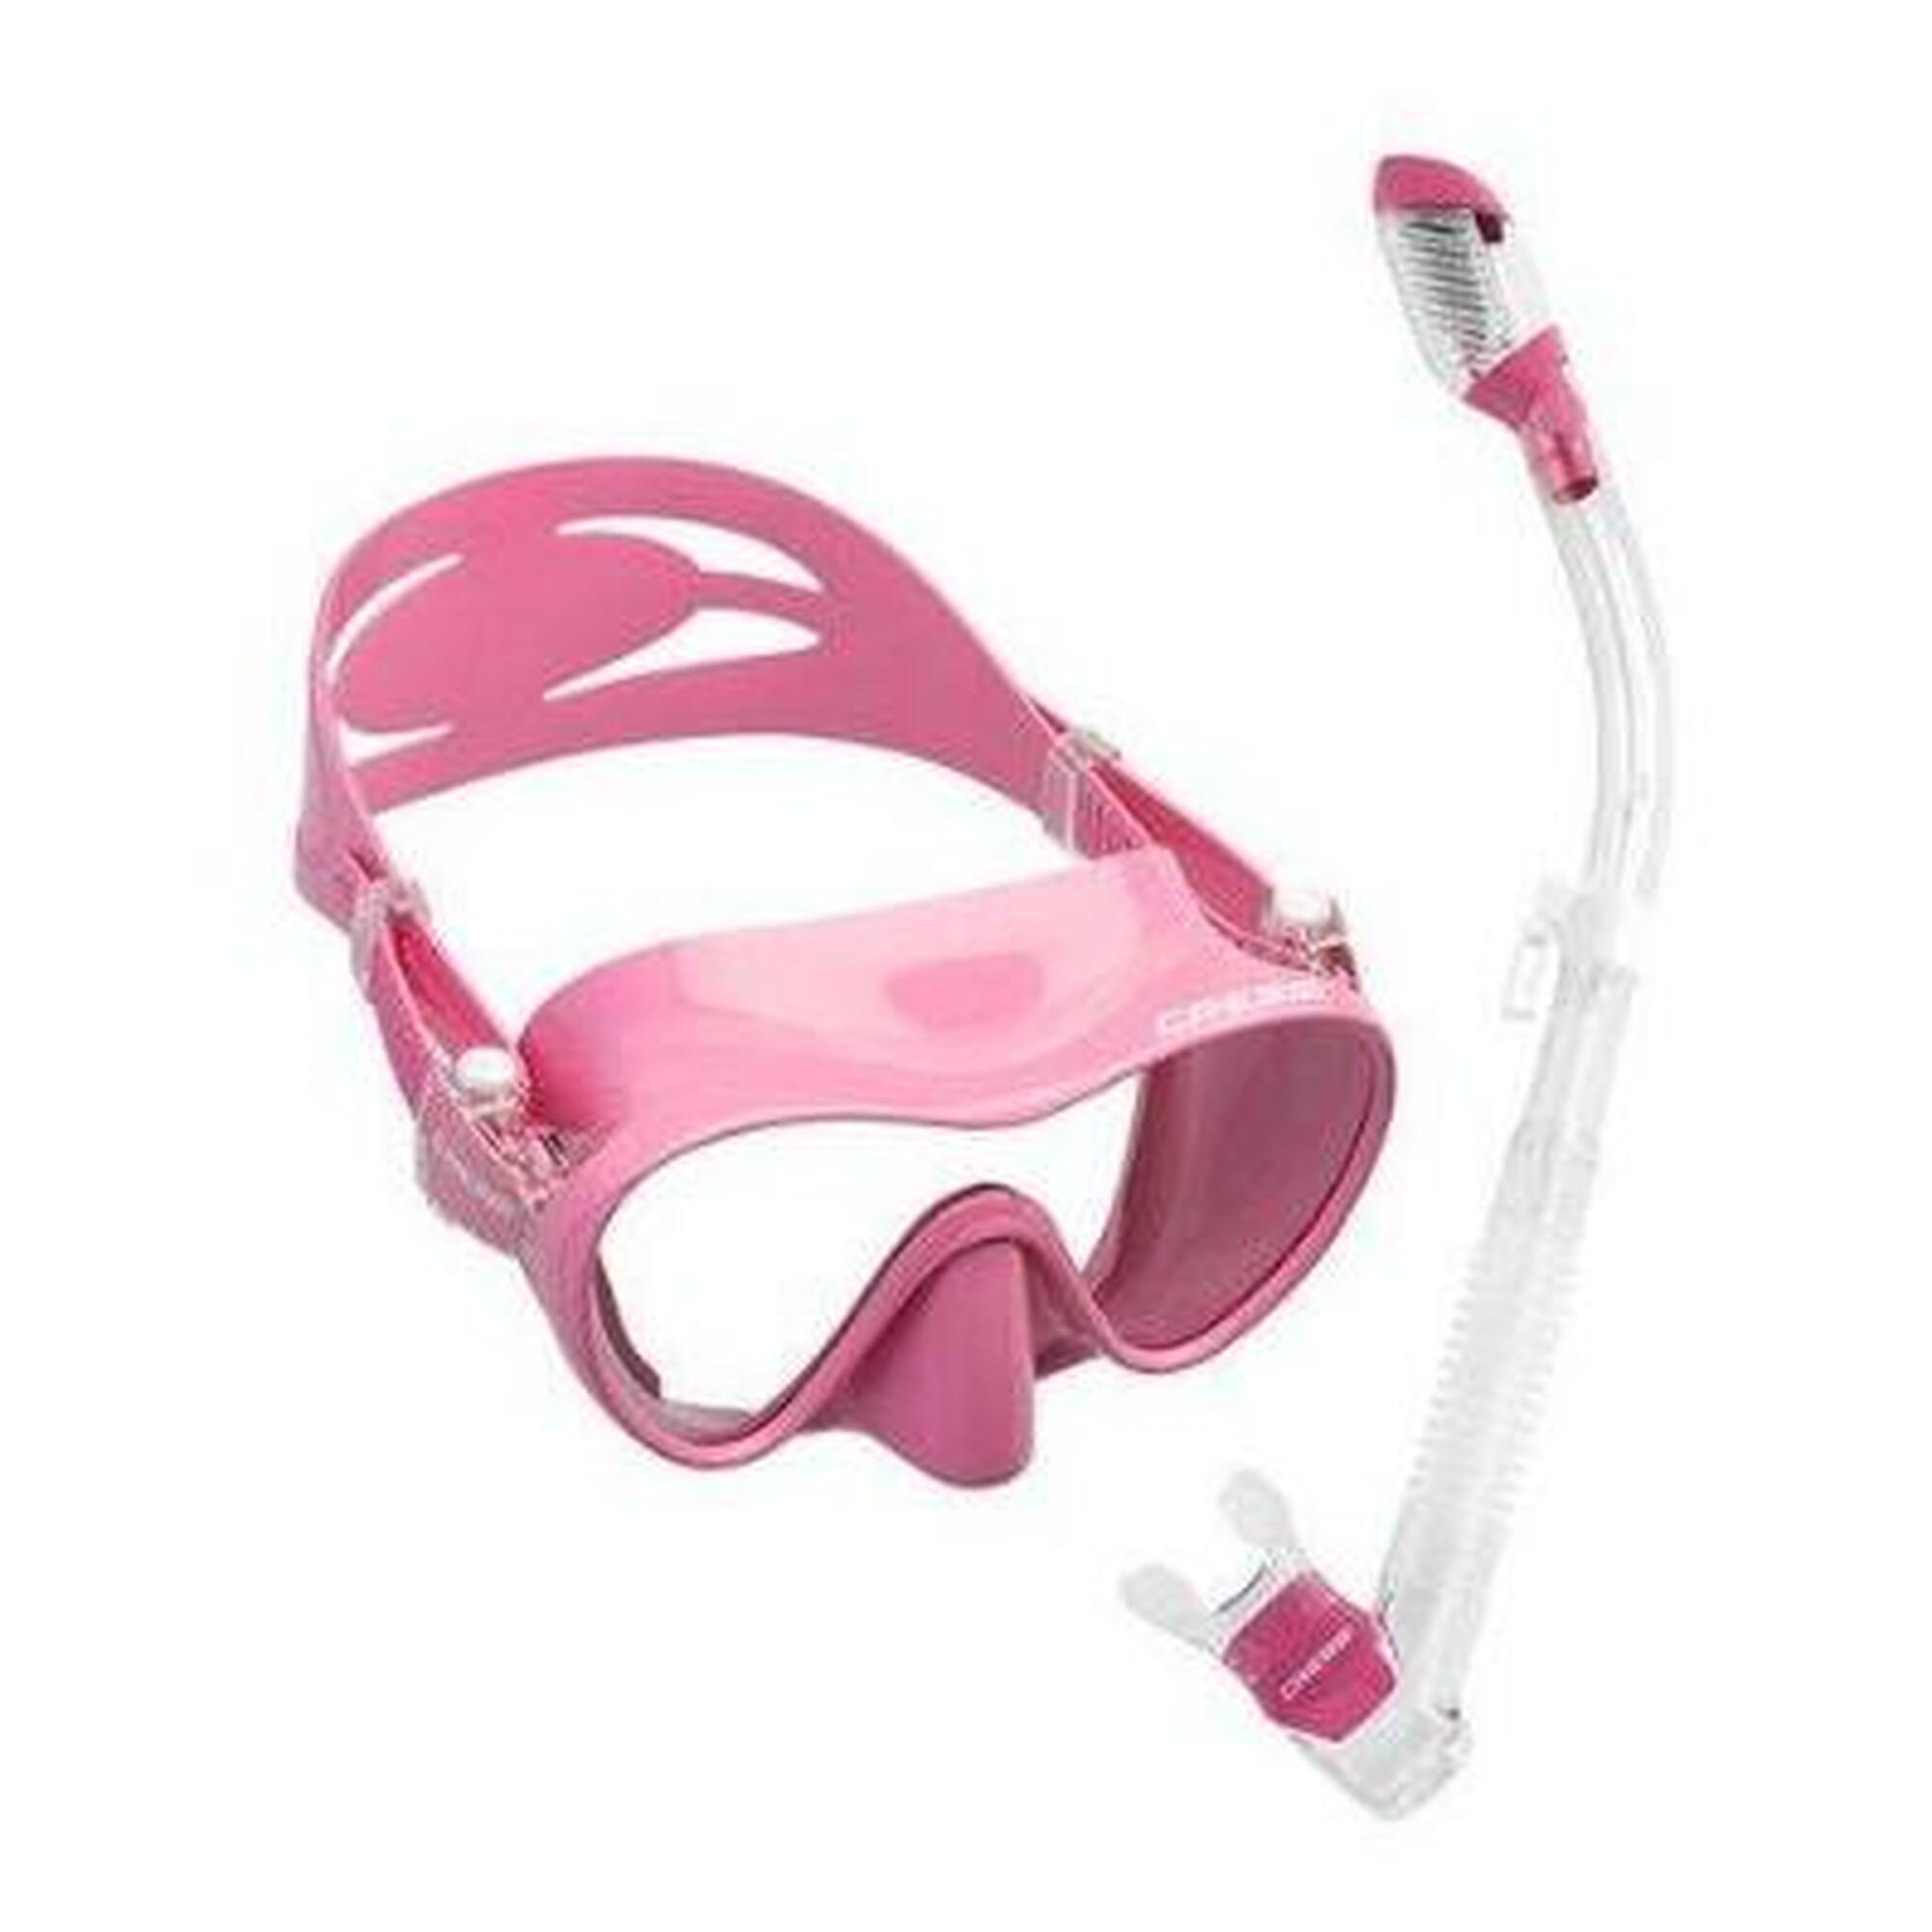 F1 Frameless 面鏡 + Dry 呼吸管組合 - 粉色